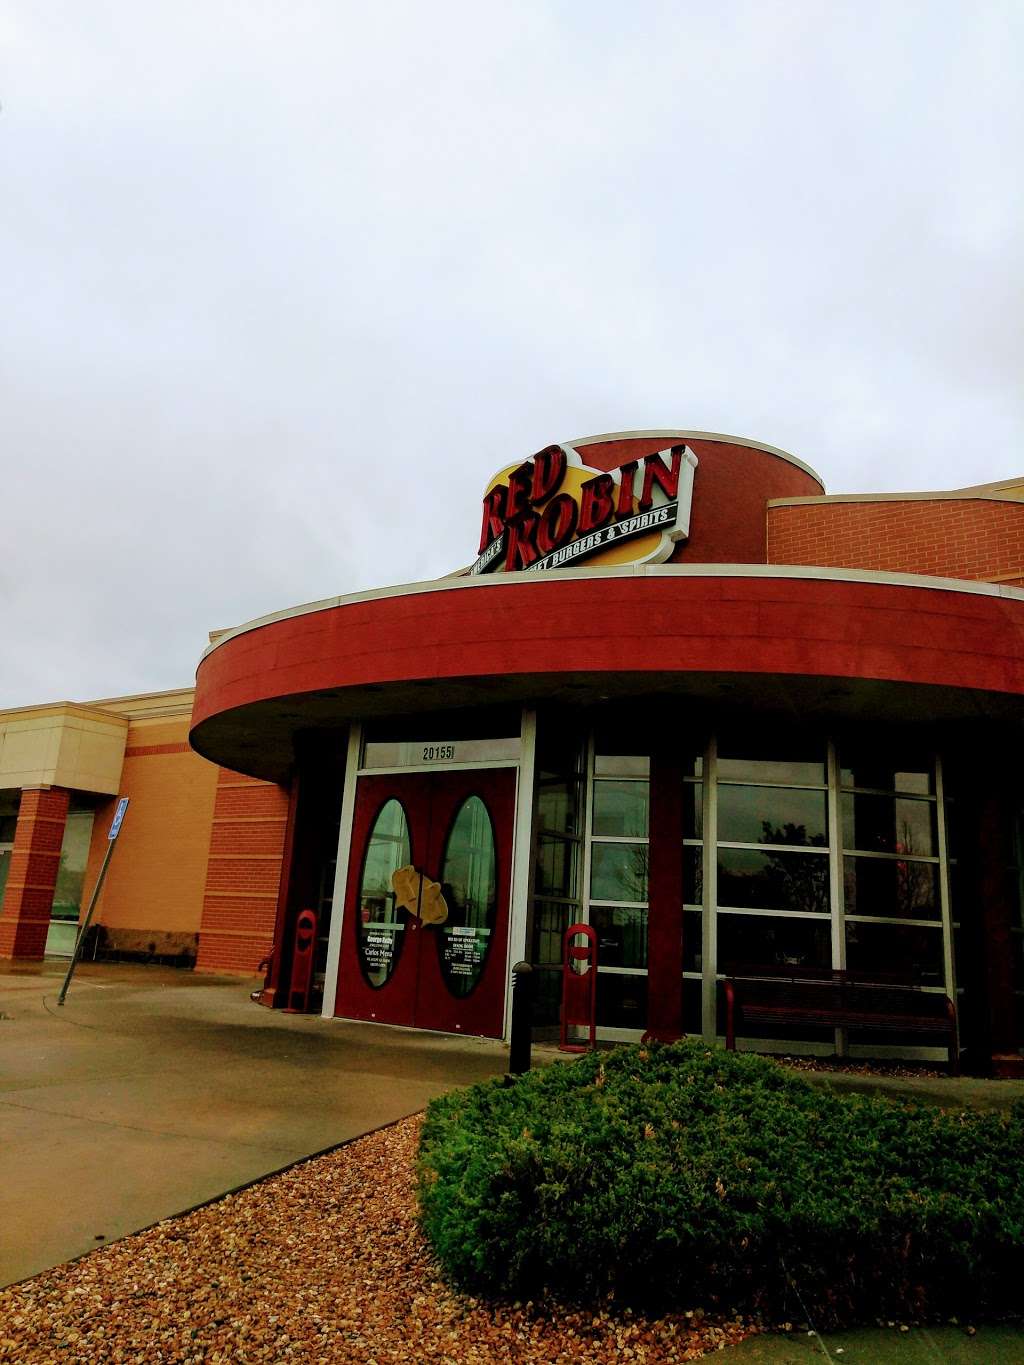 Red Robin Gourmet Burgers and Brews | 20155 W 153rd St, Olathe, KS 66061, USA | Phone: (913) 390-1400